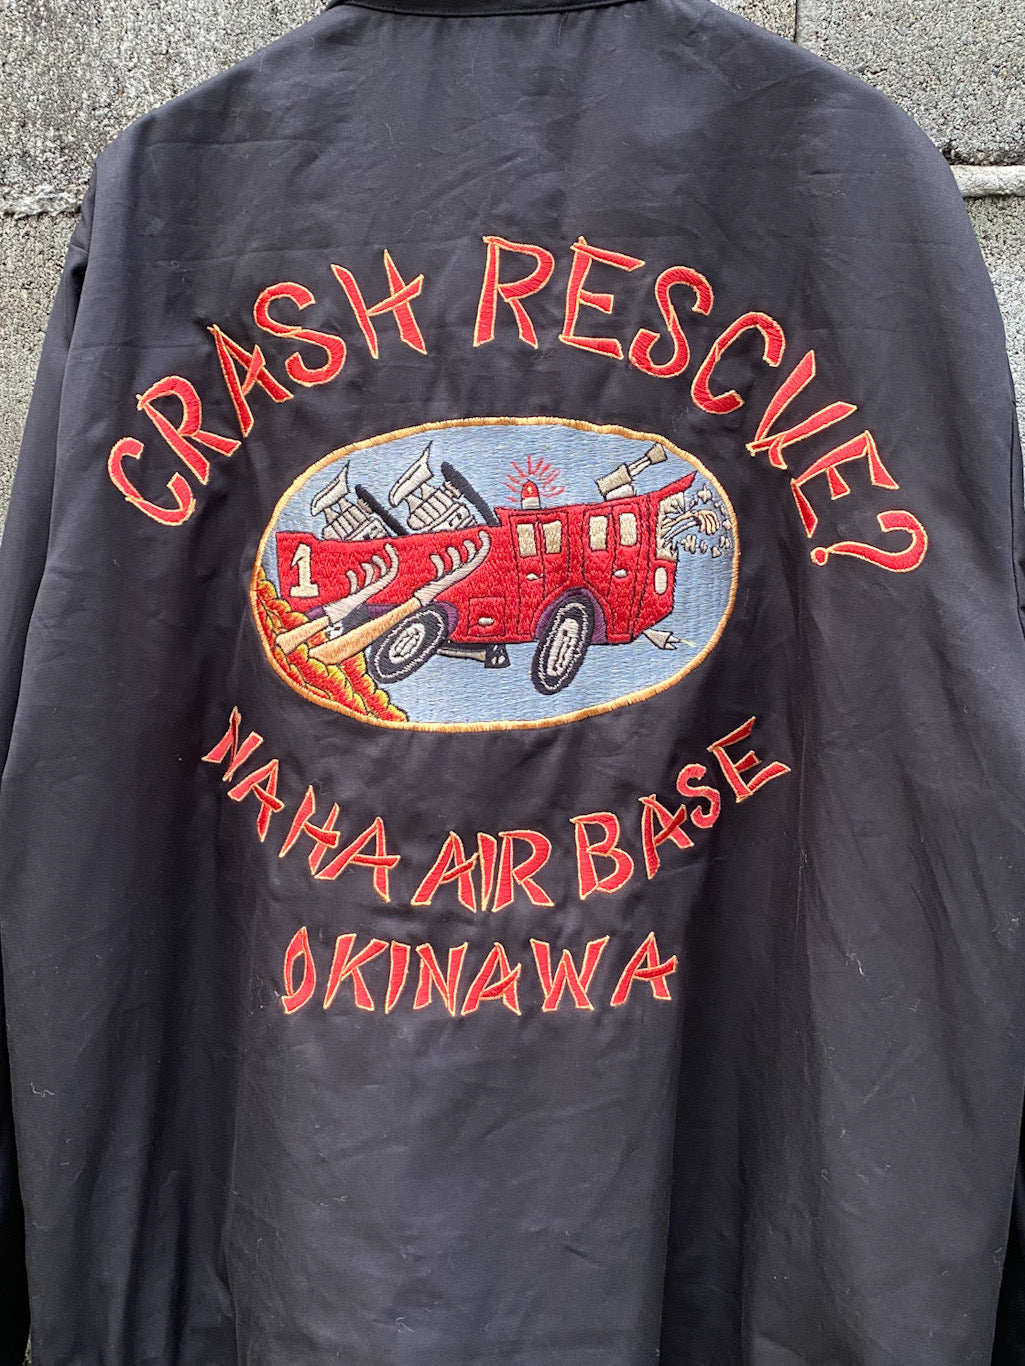 Late 1950s Style Cotton Okinawa Jumper “CRASH RESCUE ? NAHA AIRBASE OKINAWA”